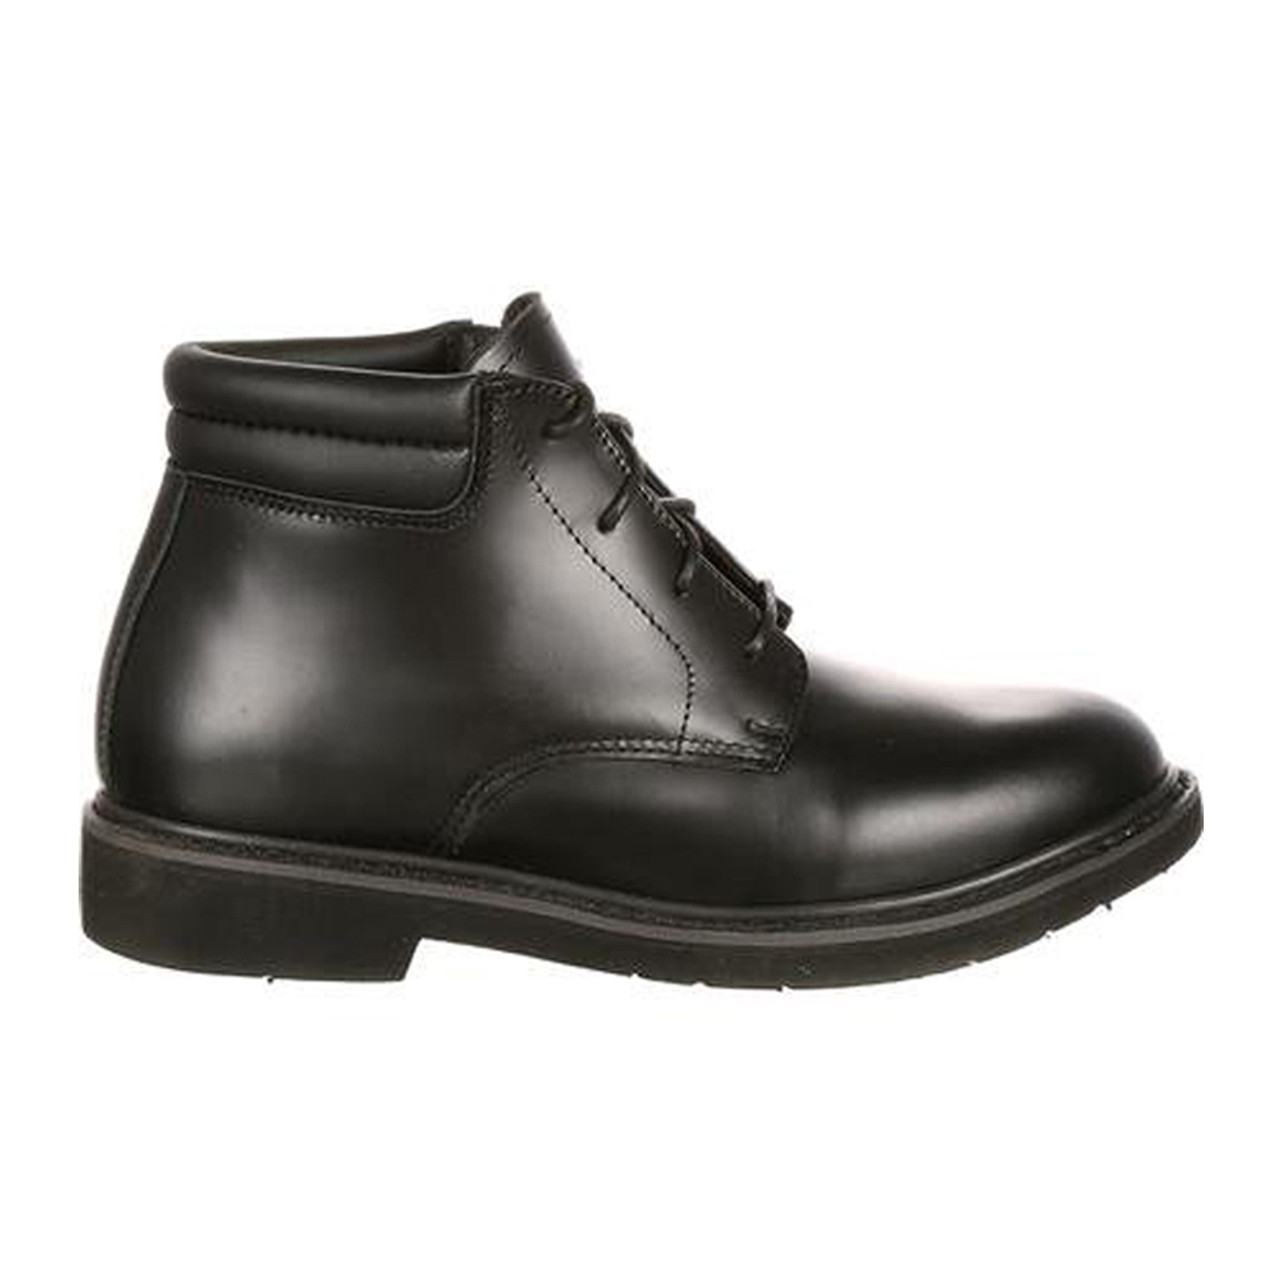 mens wide width chukka boots